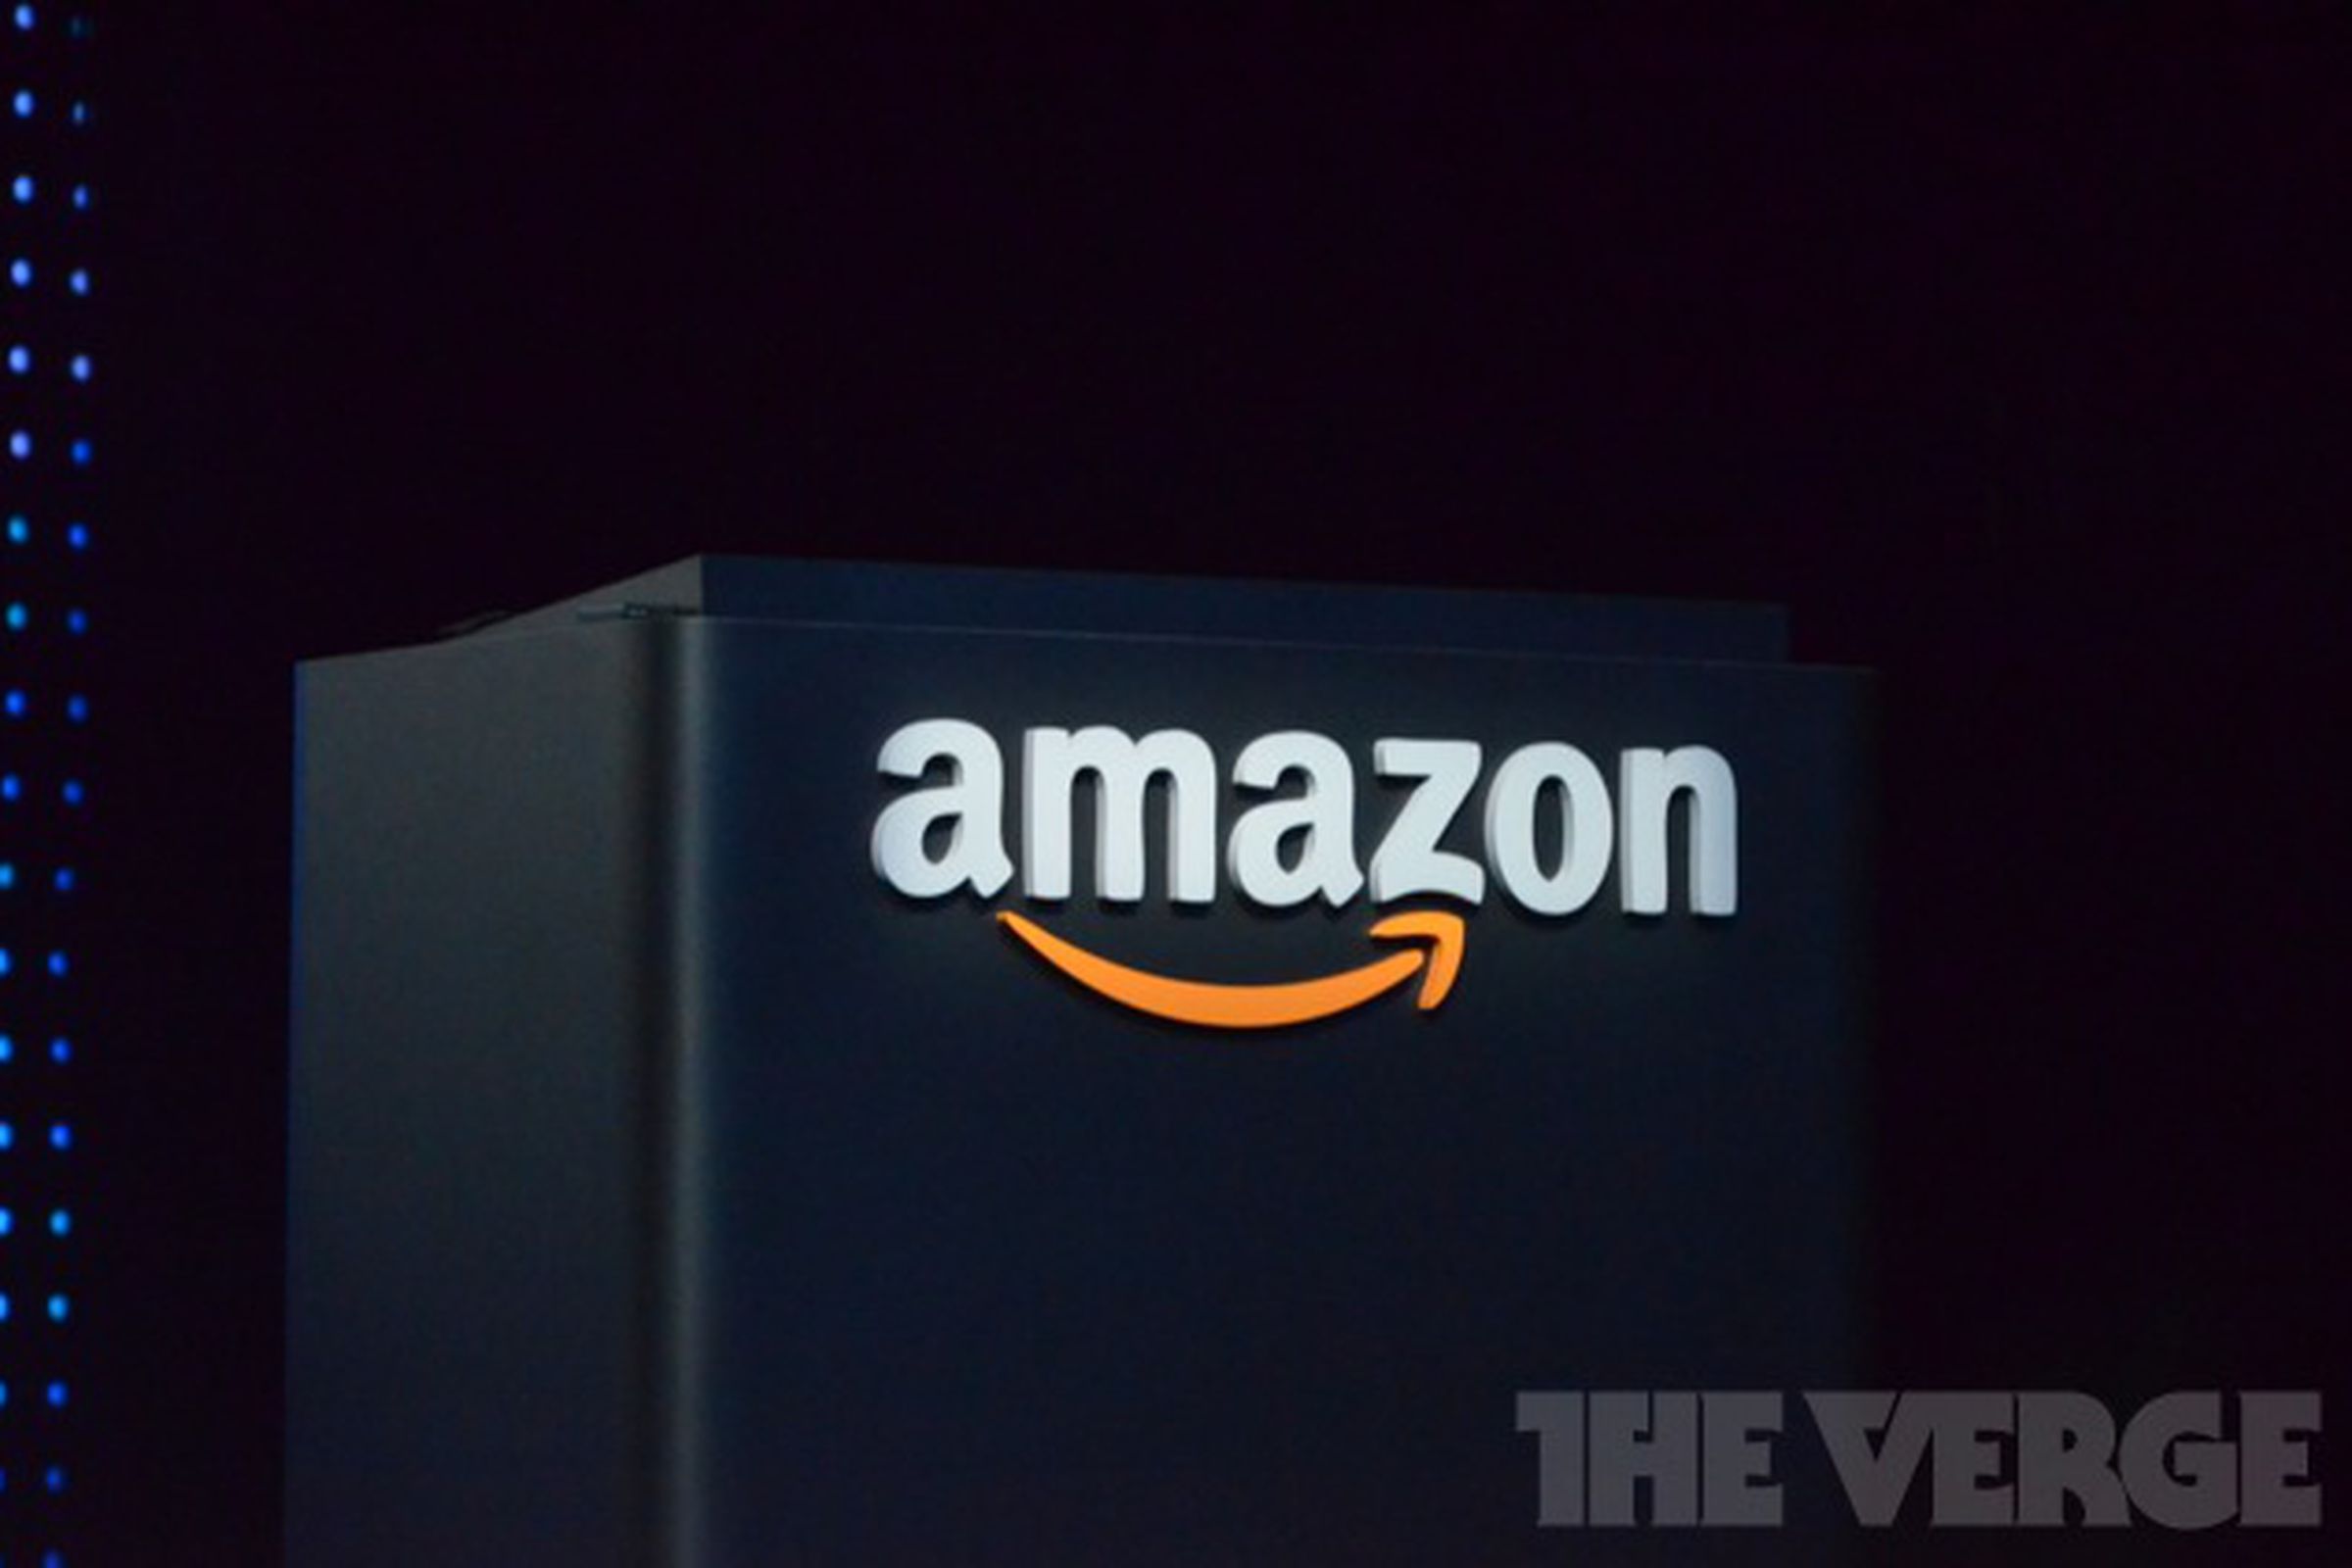 A stock photo of the Amazon logo